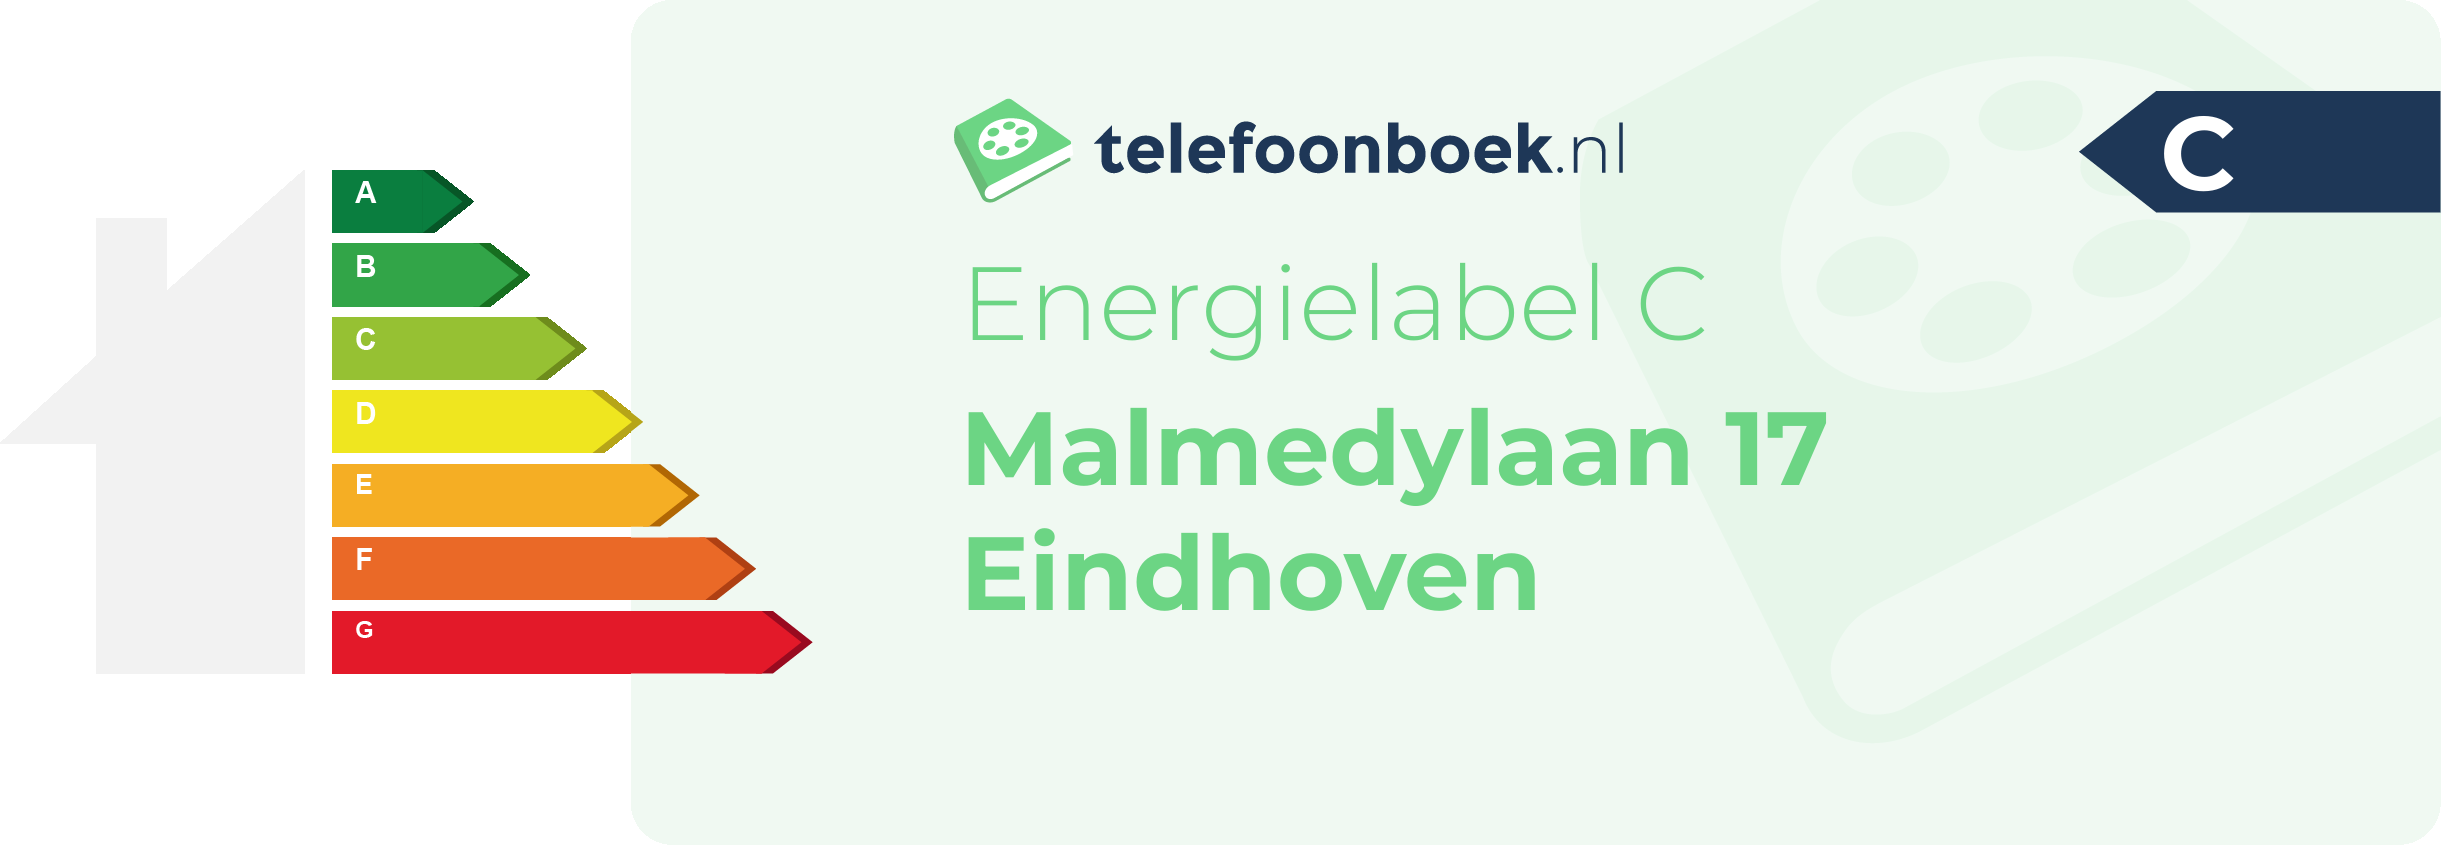 Energielabel Malmedylaan 17 Eindhoven